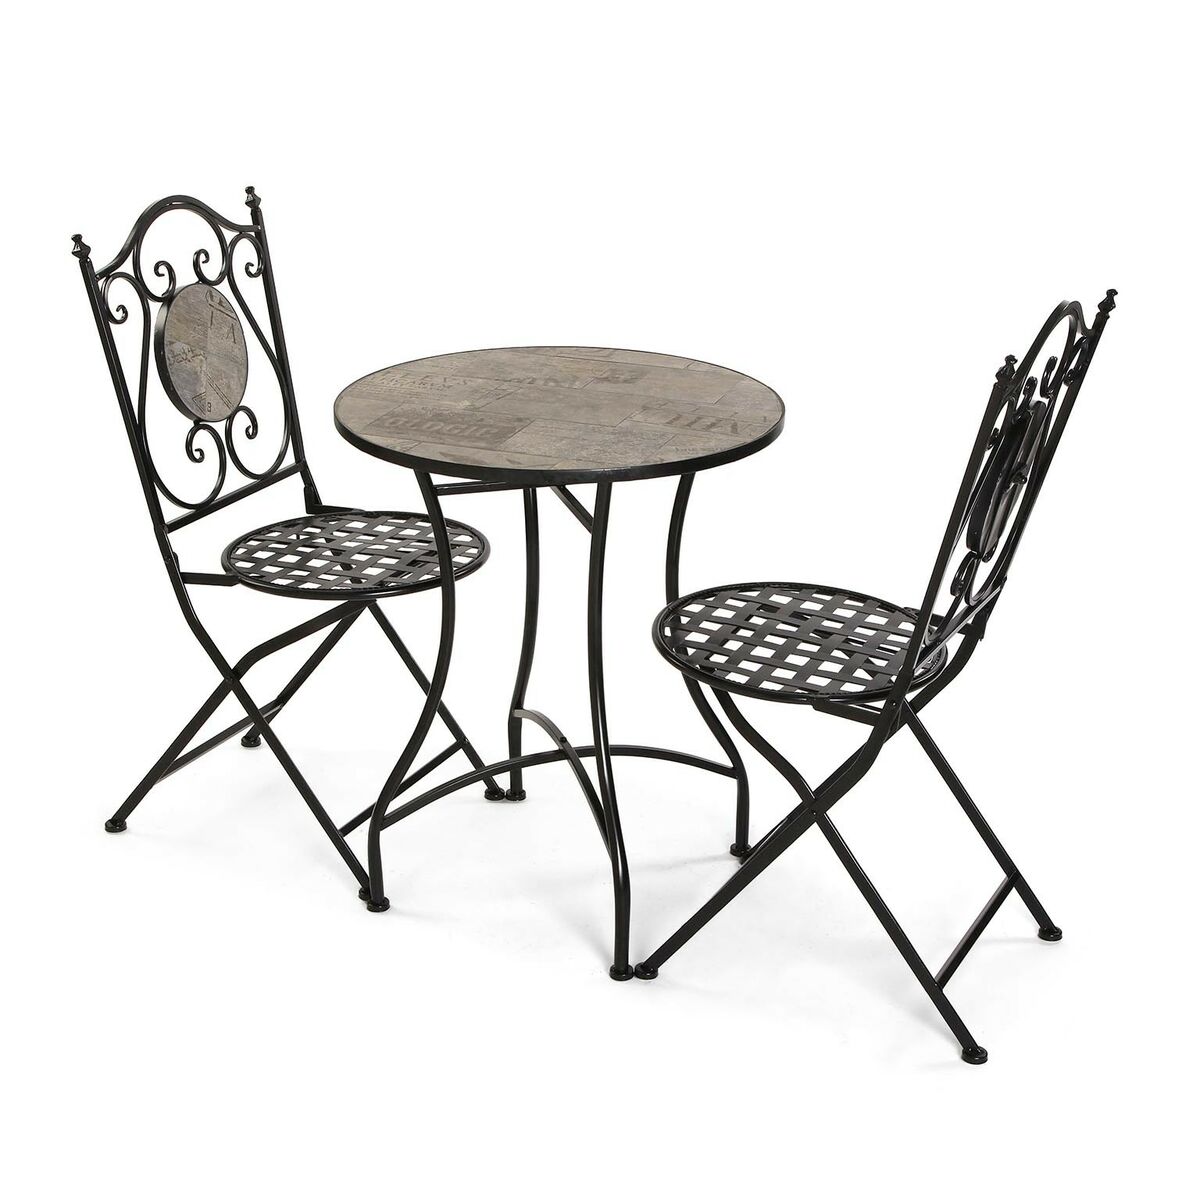 Table set with 2 chairs Versa Ivar Black Metal 60 x 71 x 60 cm